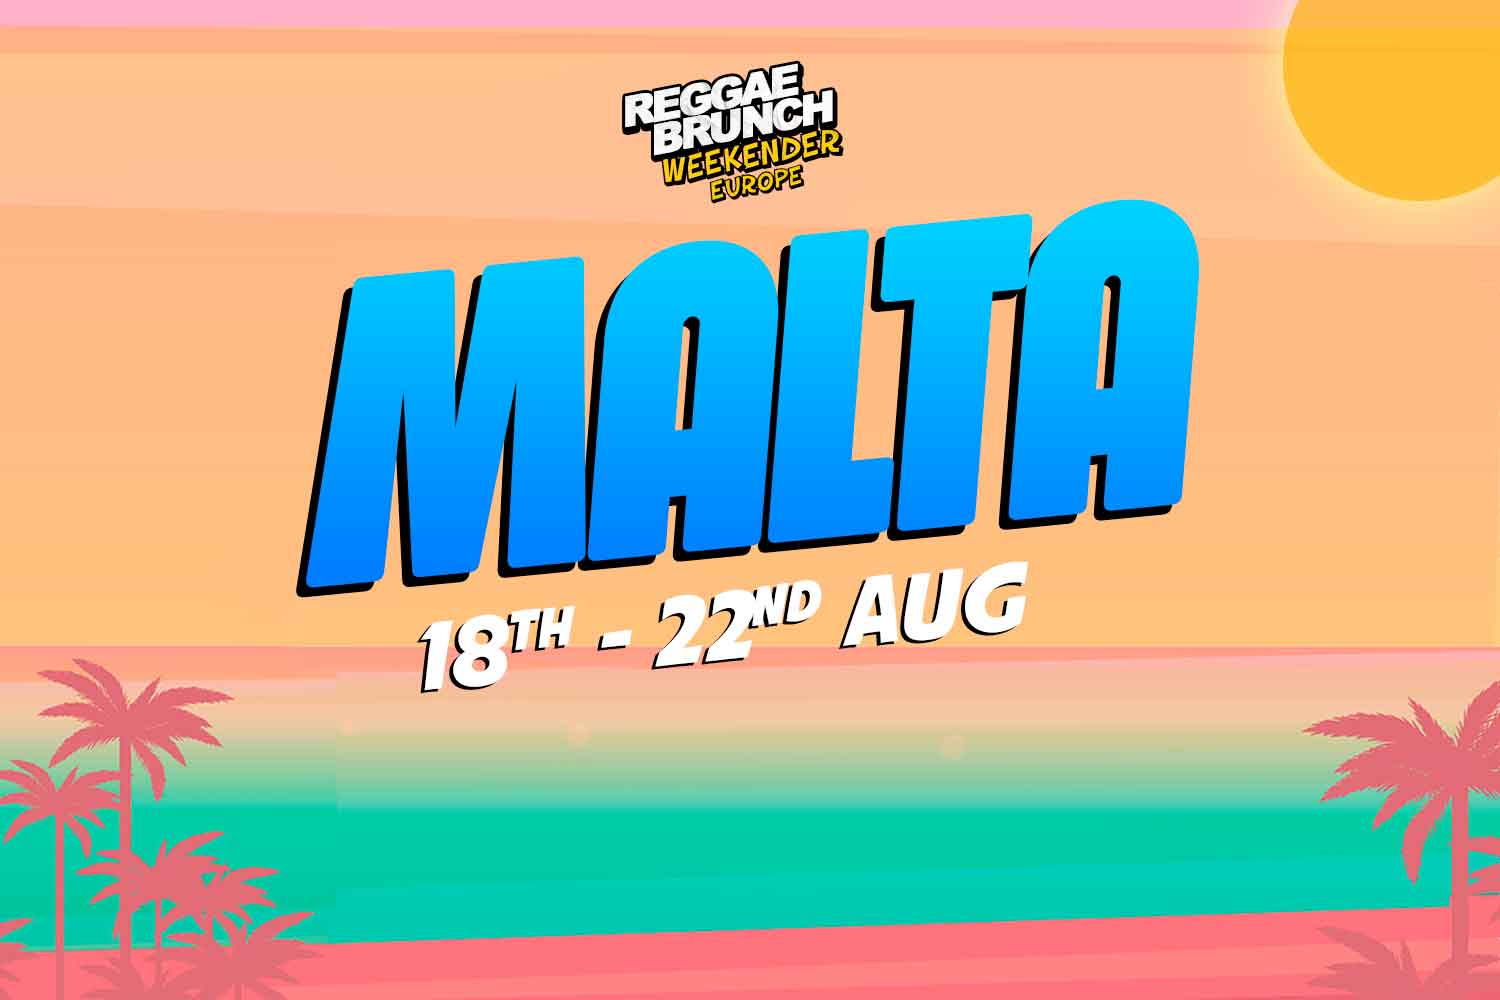 18th-22nd Aug - Malta 